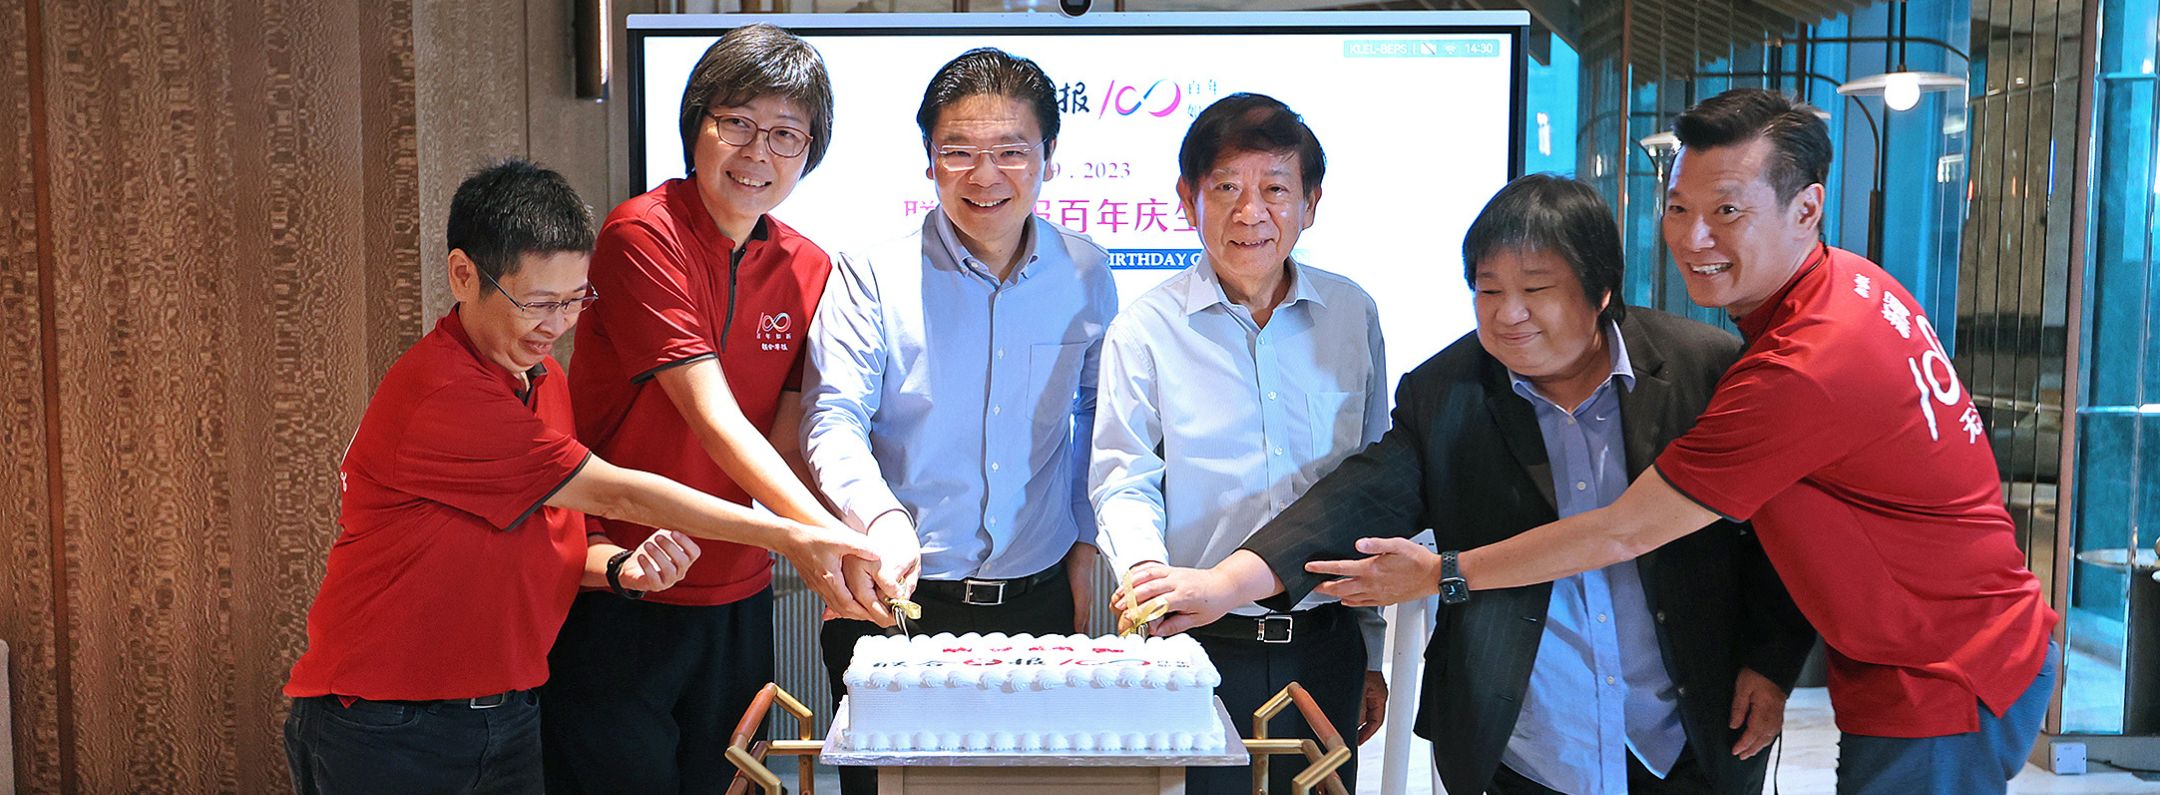 DPM Wong at the Zaobao Centennial Birthday Celebrations_Hero jpg